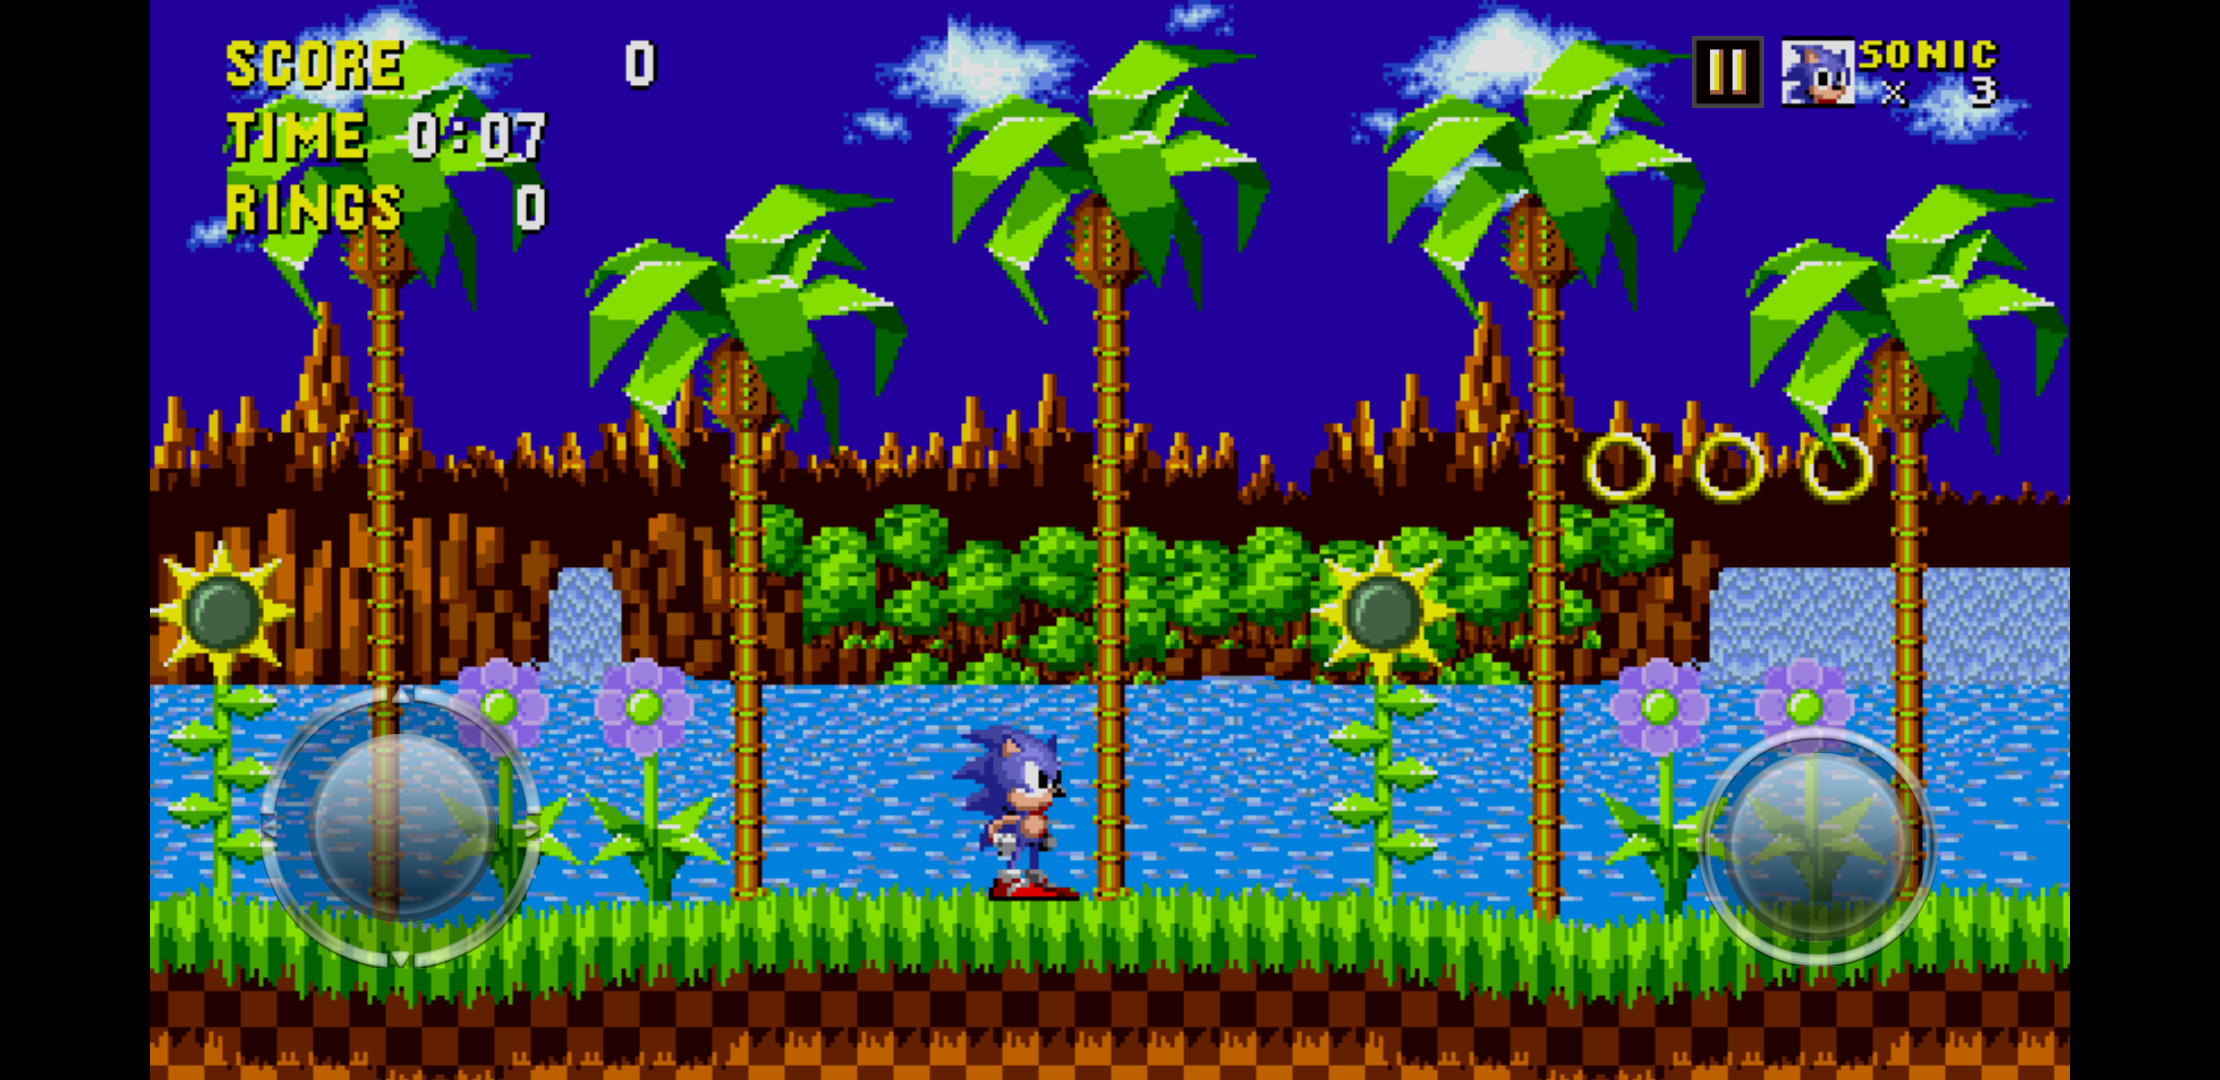 Sonic the hedgehog 2 андроид. Sonic 1 Sega. Соник первая игра. Соник 1:1. Sonic the Hedgehog игра 1.